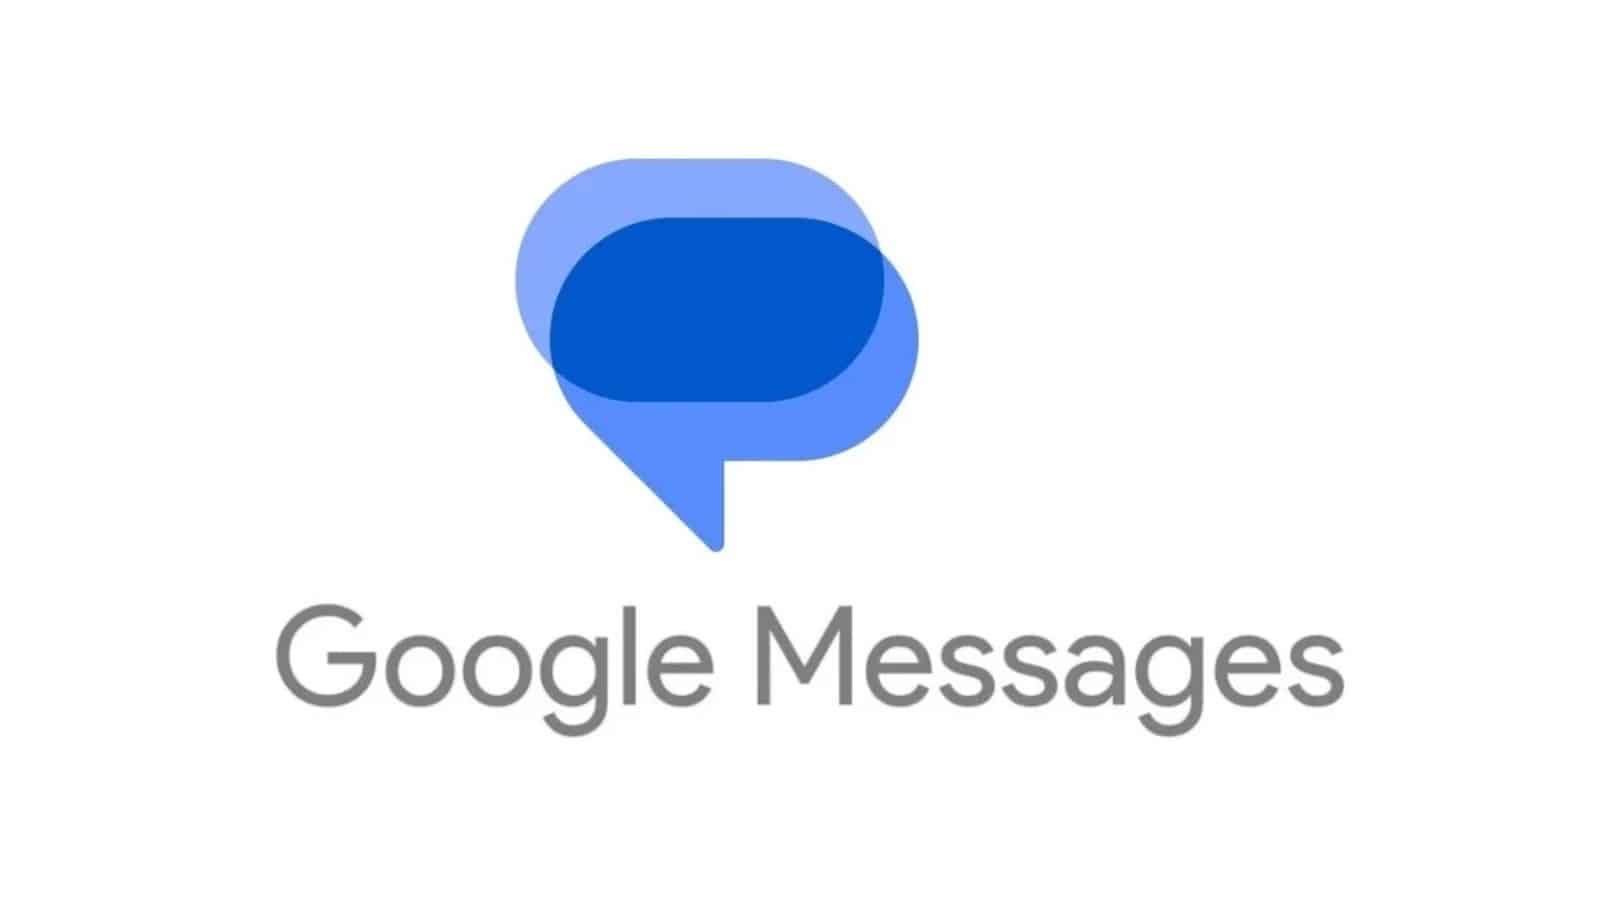 google messages, Google Messages: Ίσως αρχίσει σύντομα να υποστηρίζει προφίλ χρηστών